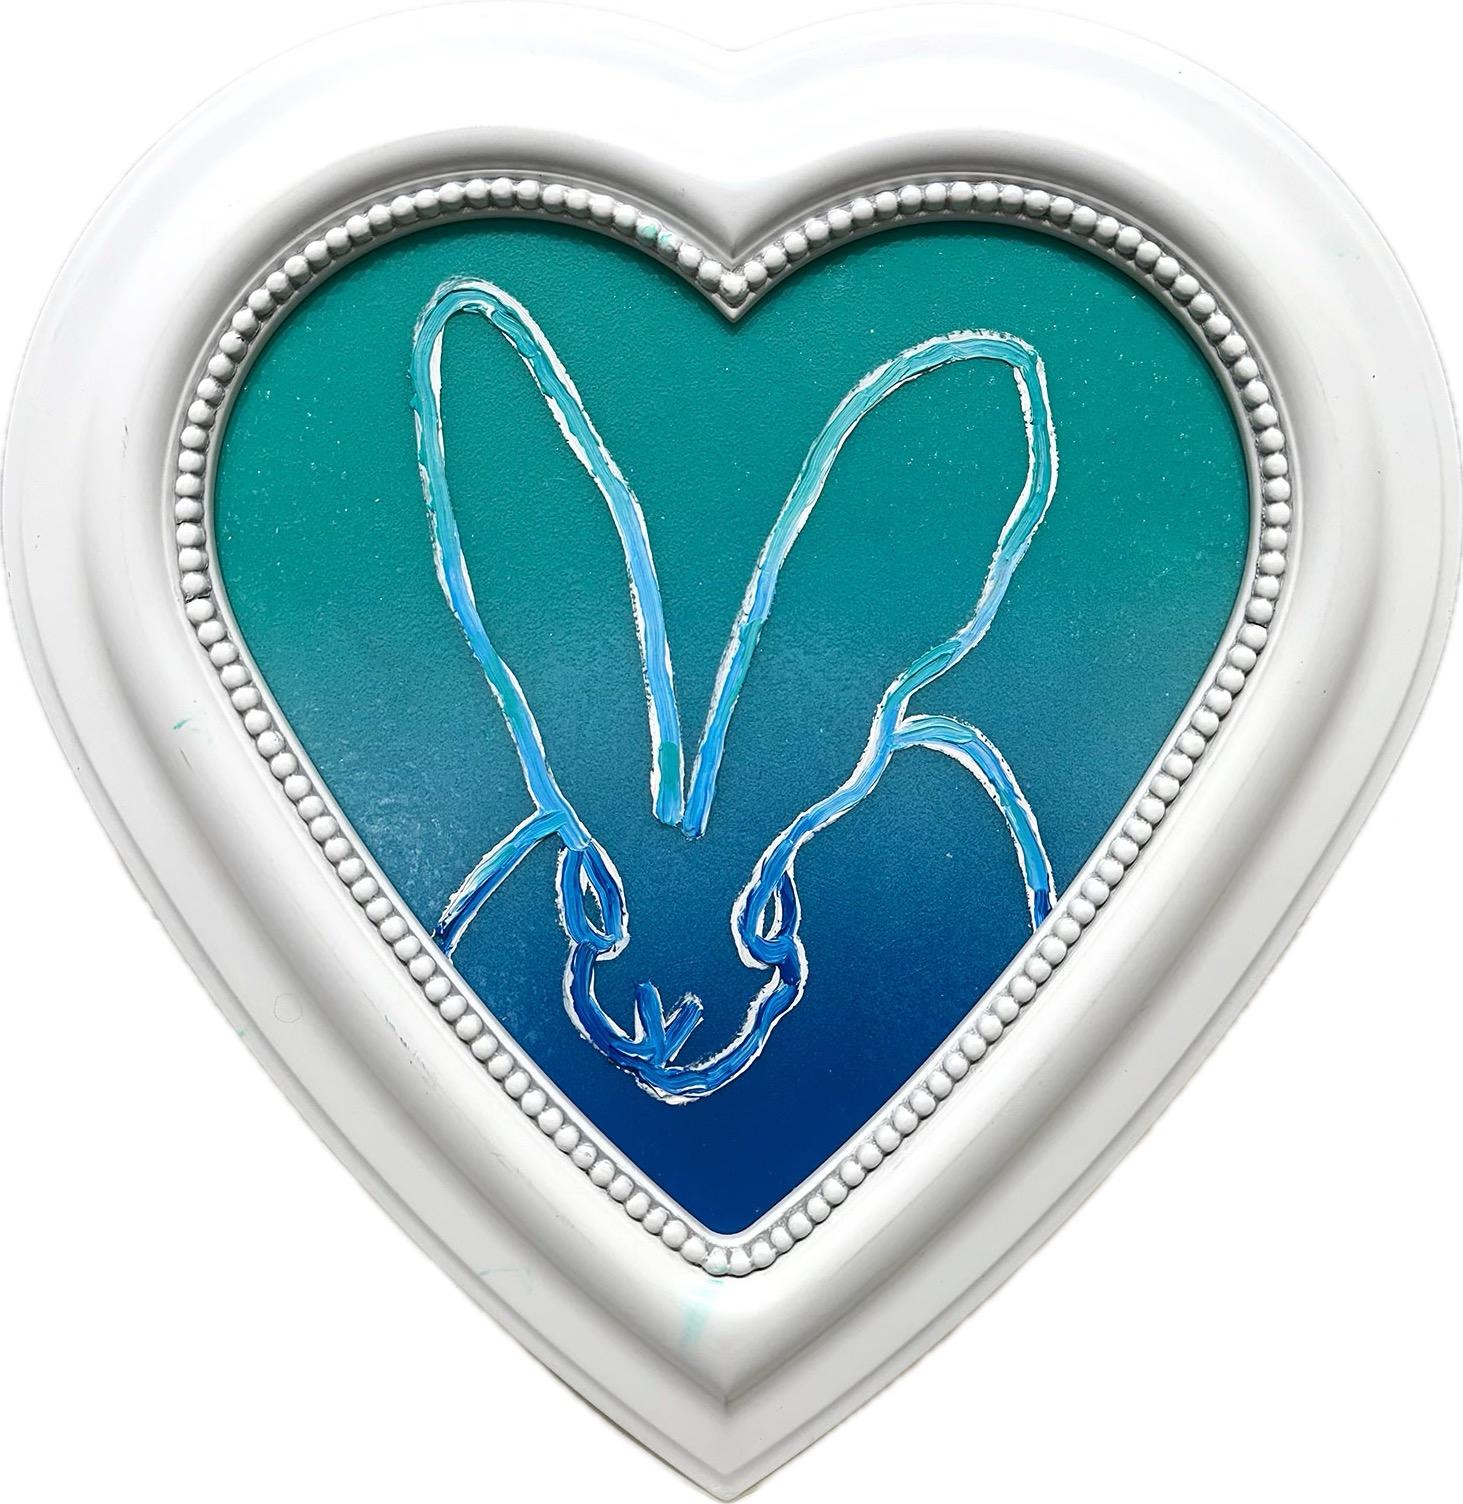 Hunt Slonem Abstract Painting - "Heart Felt" Heart Shaped Diamond Dust Turquoise Bunny Oil Painting Framed